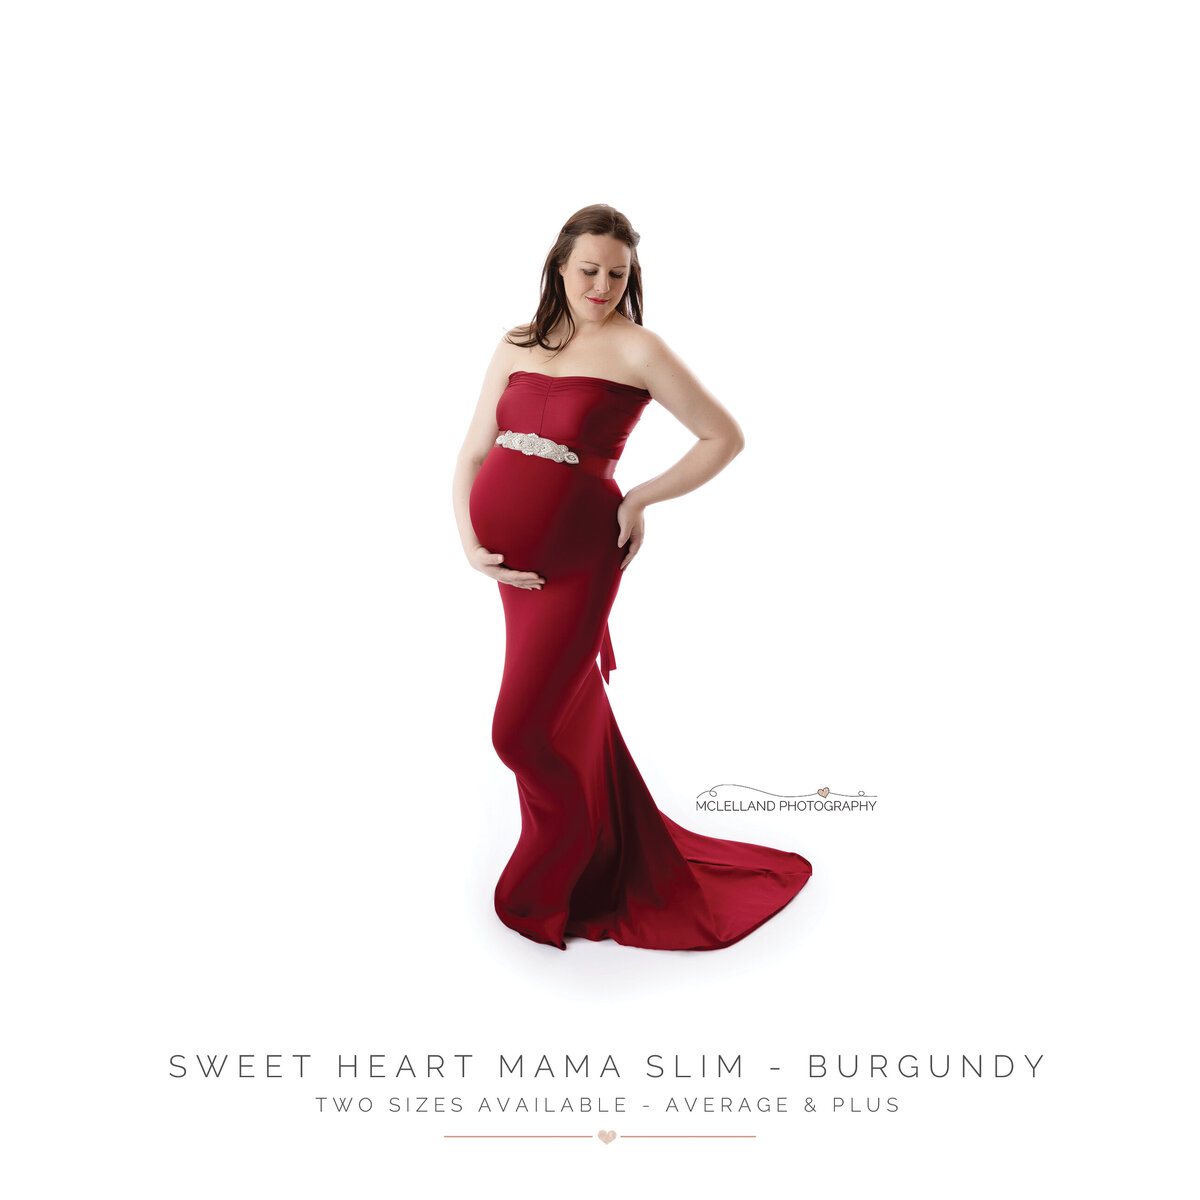 Sweet Heart Mama Slim - Burgundy